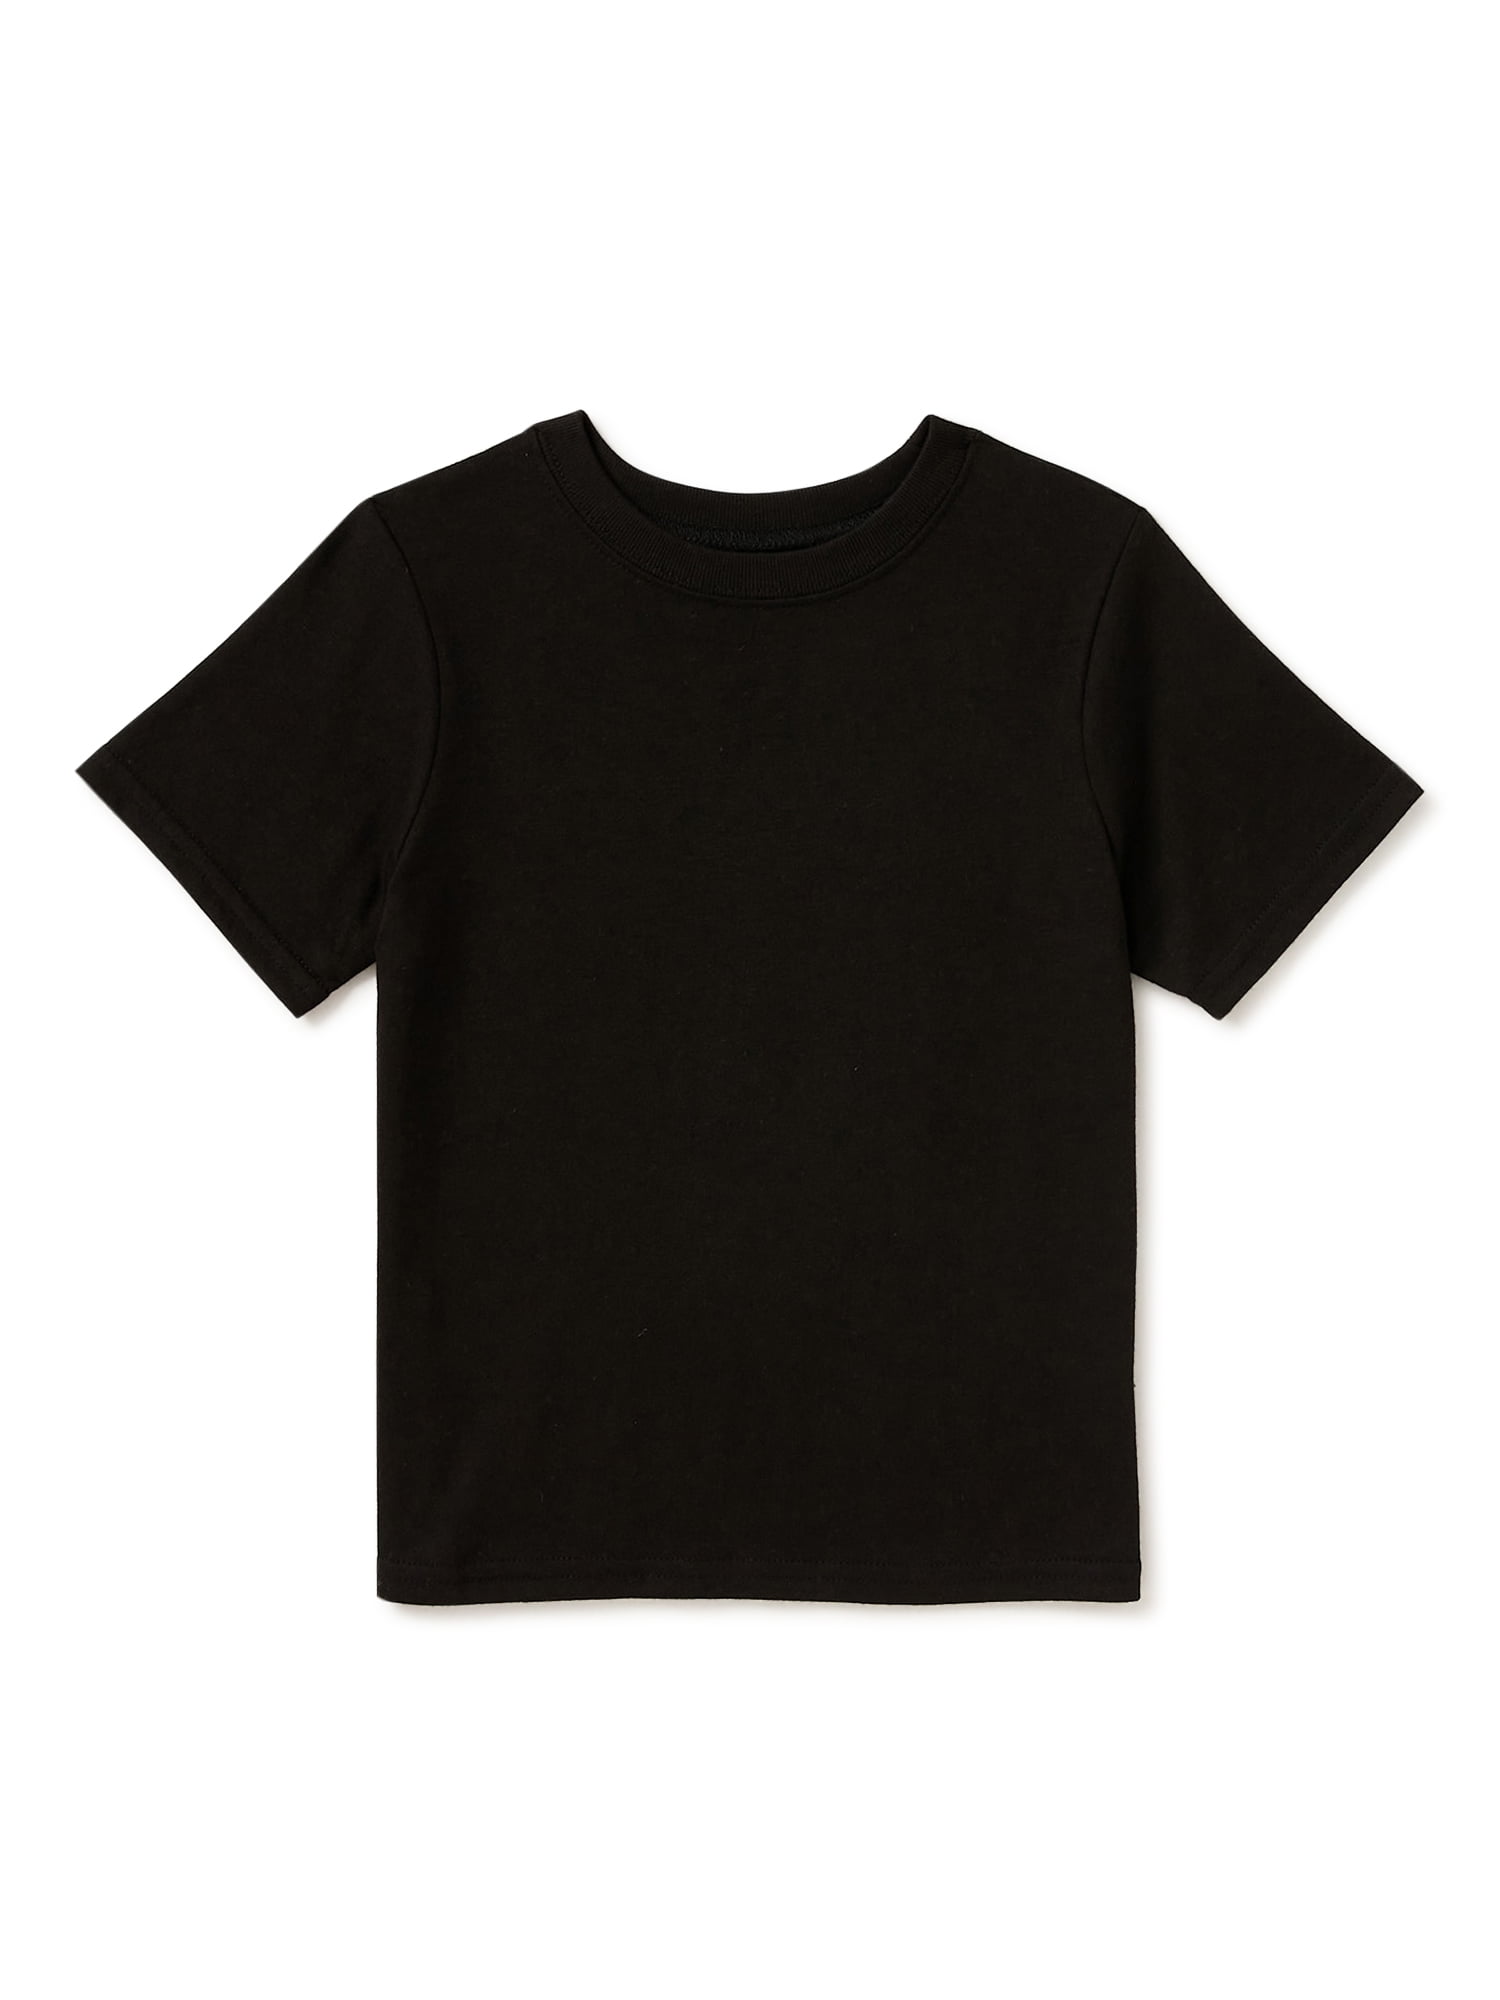 Veganism Unisex-Child T Shirt Baby Toddler Tee Round-Neck Short Sleeve Shirt